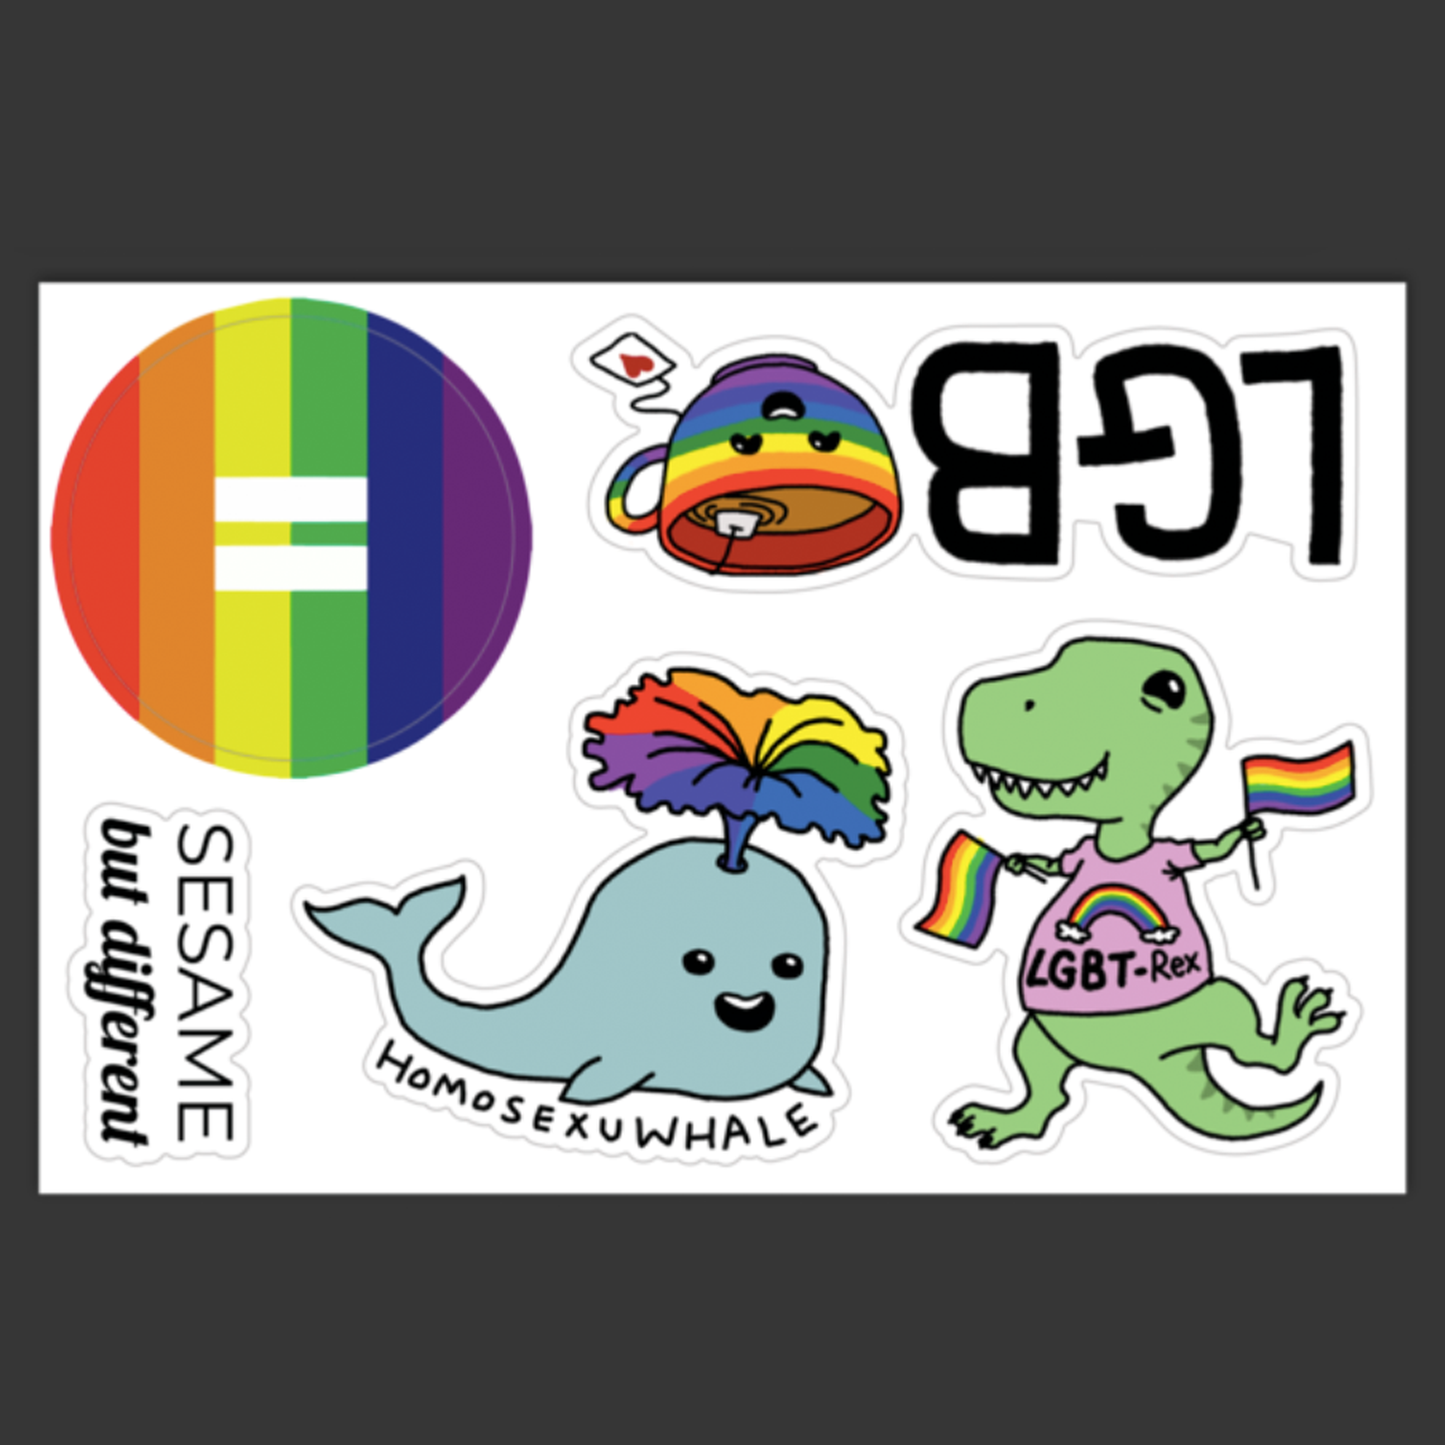 Punny Cute LGBT-Rex, Homosexu-Whale, LGB-Tea, Equality Rainbow Vinyl Sticker Sheet | Gay Pride | LGBTQ | Laptop Stickers